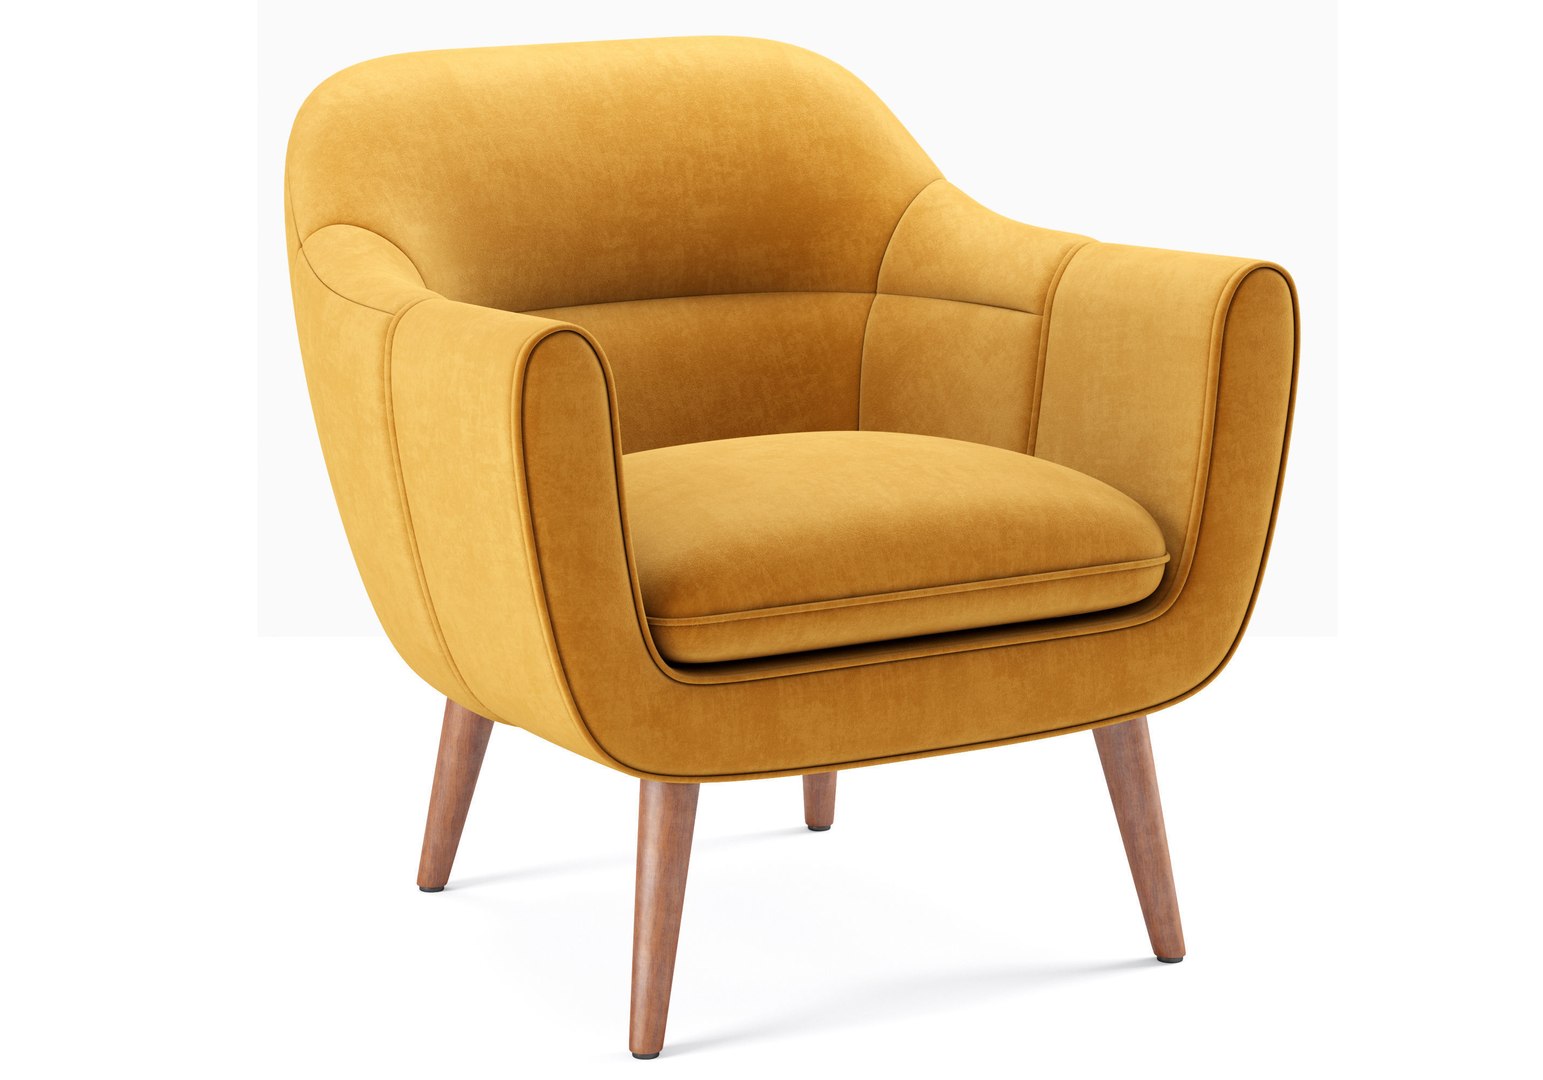 Ada Lounge Chair 3D Model - TurboSquid 1924626